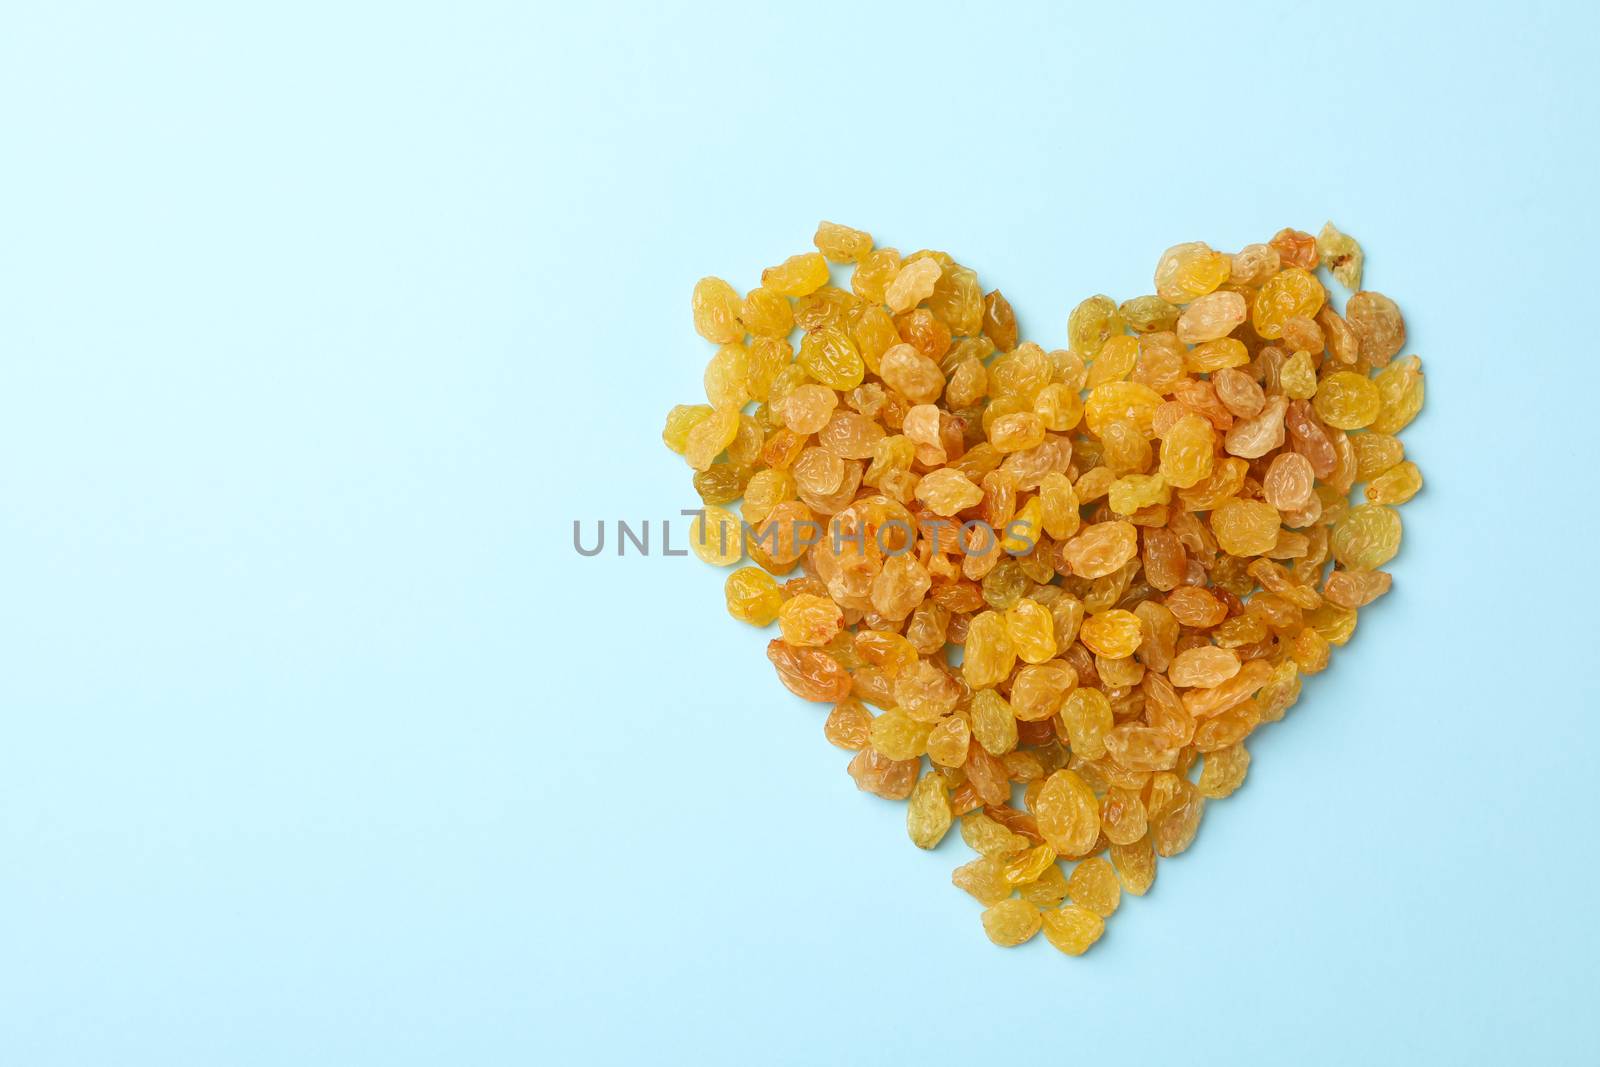 Heart made of raisins on blue background